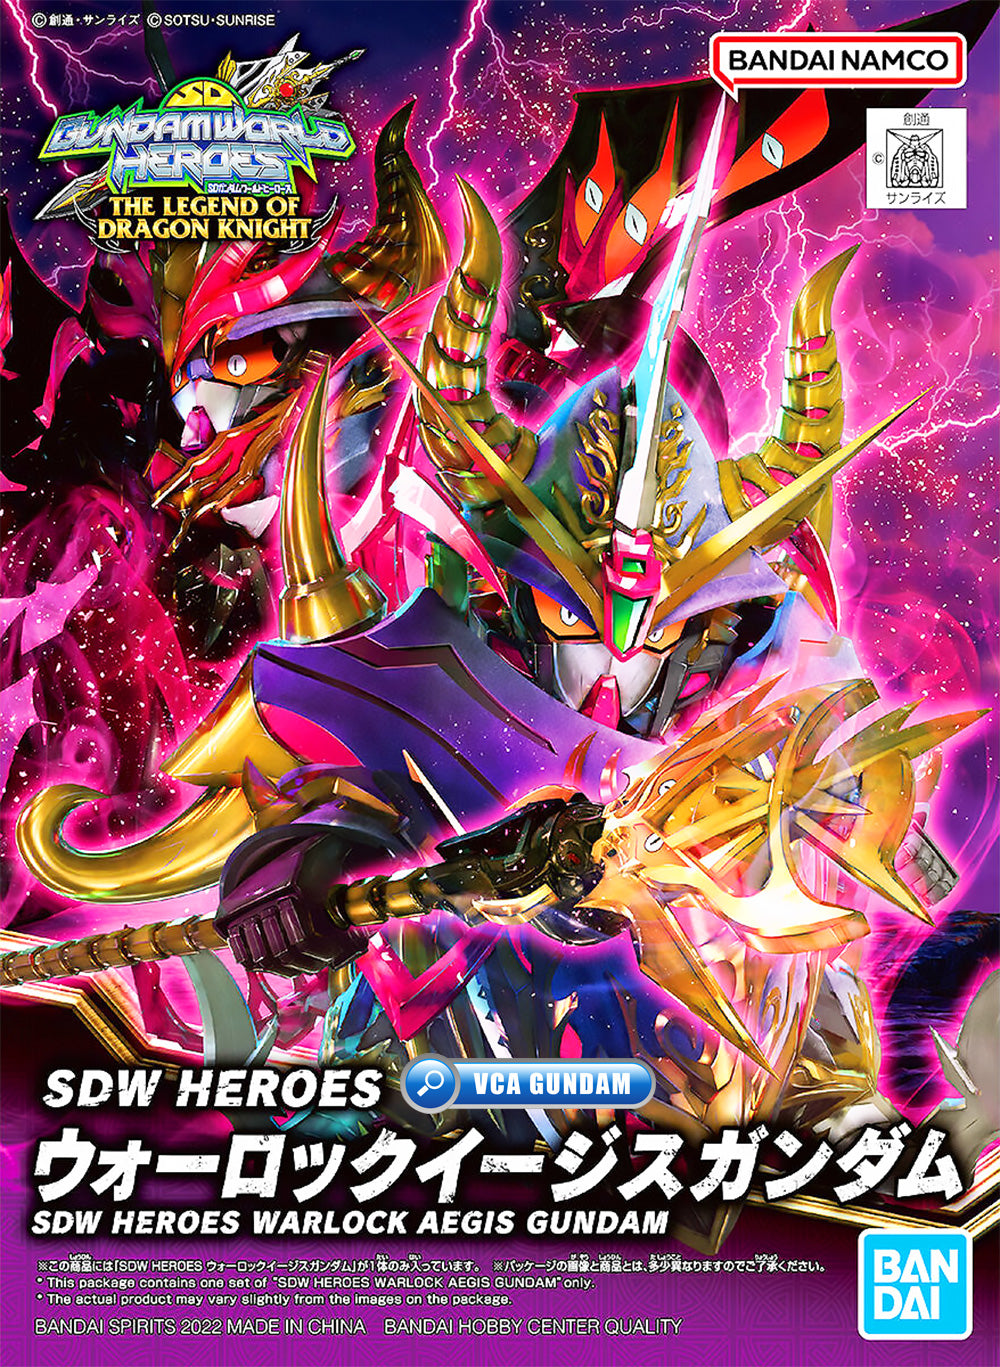 Bandai SD World Heroes SDW Warlock Aegis Gundam Plastic Model Toy VCA Singapore